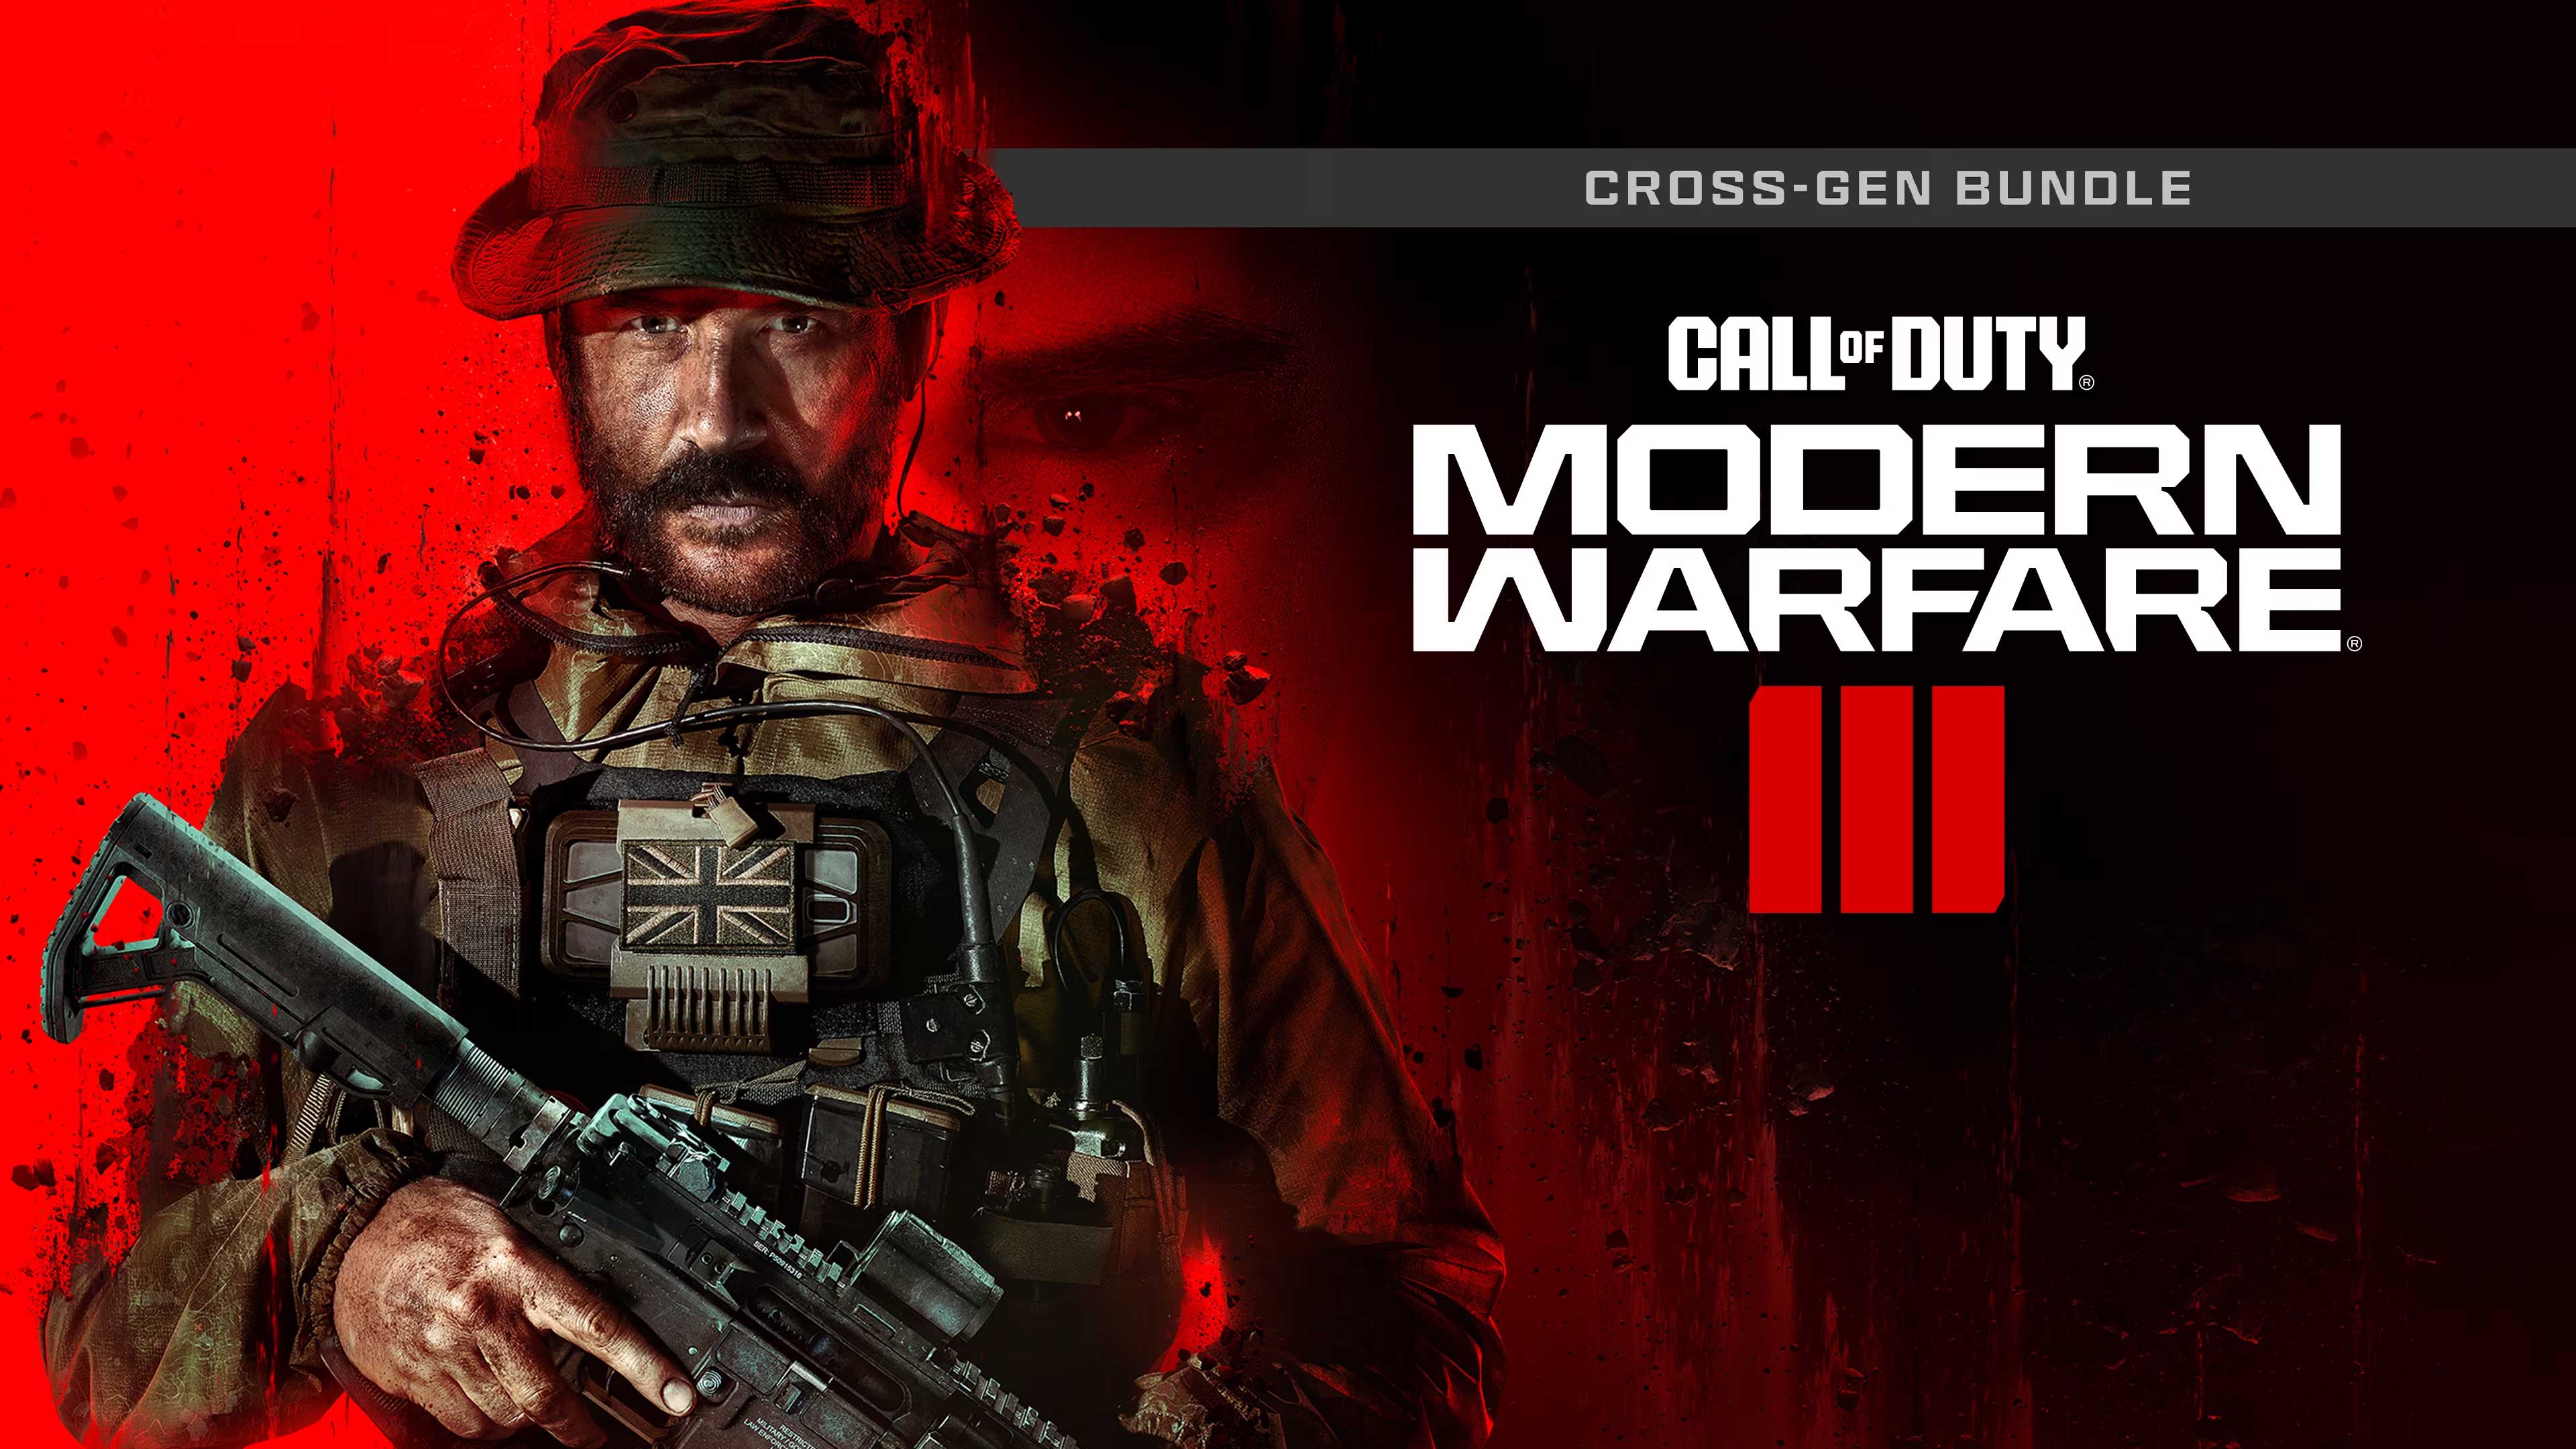 Call of Duty: Modern Warfare III - Cross-Gen Bundle, A Gamers Dreams, agamersdreams.com